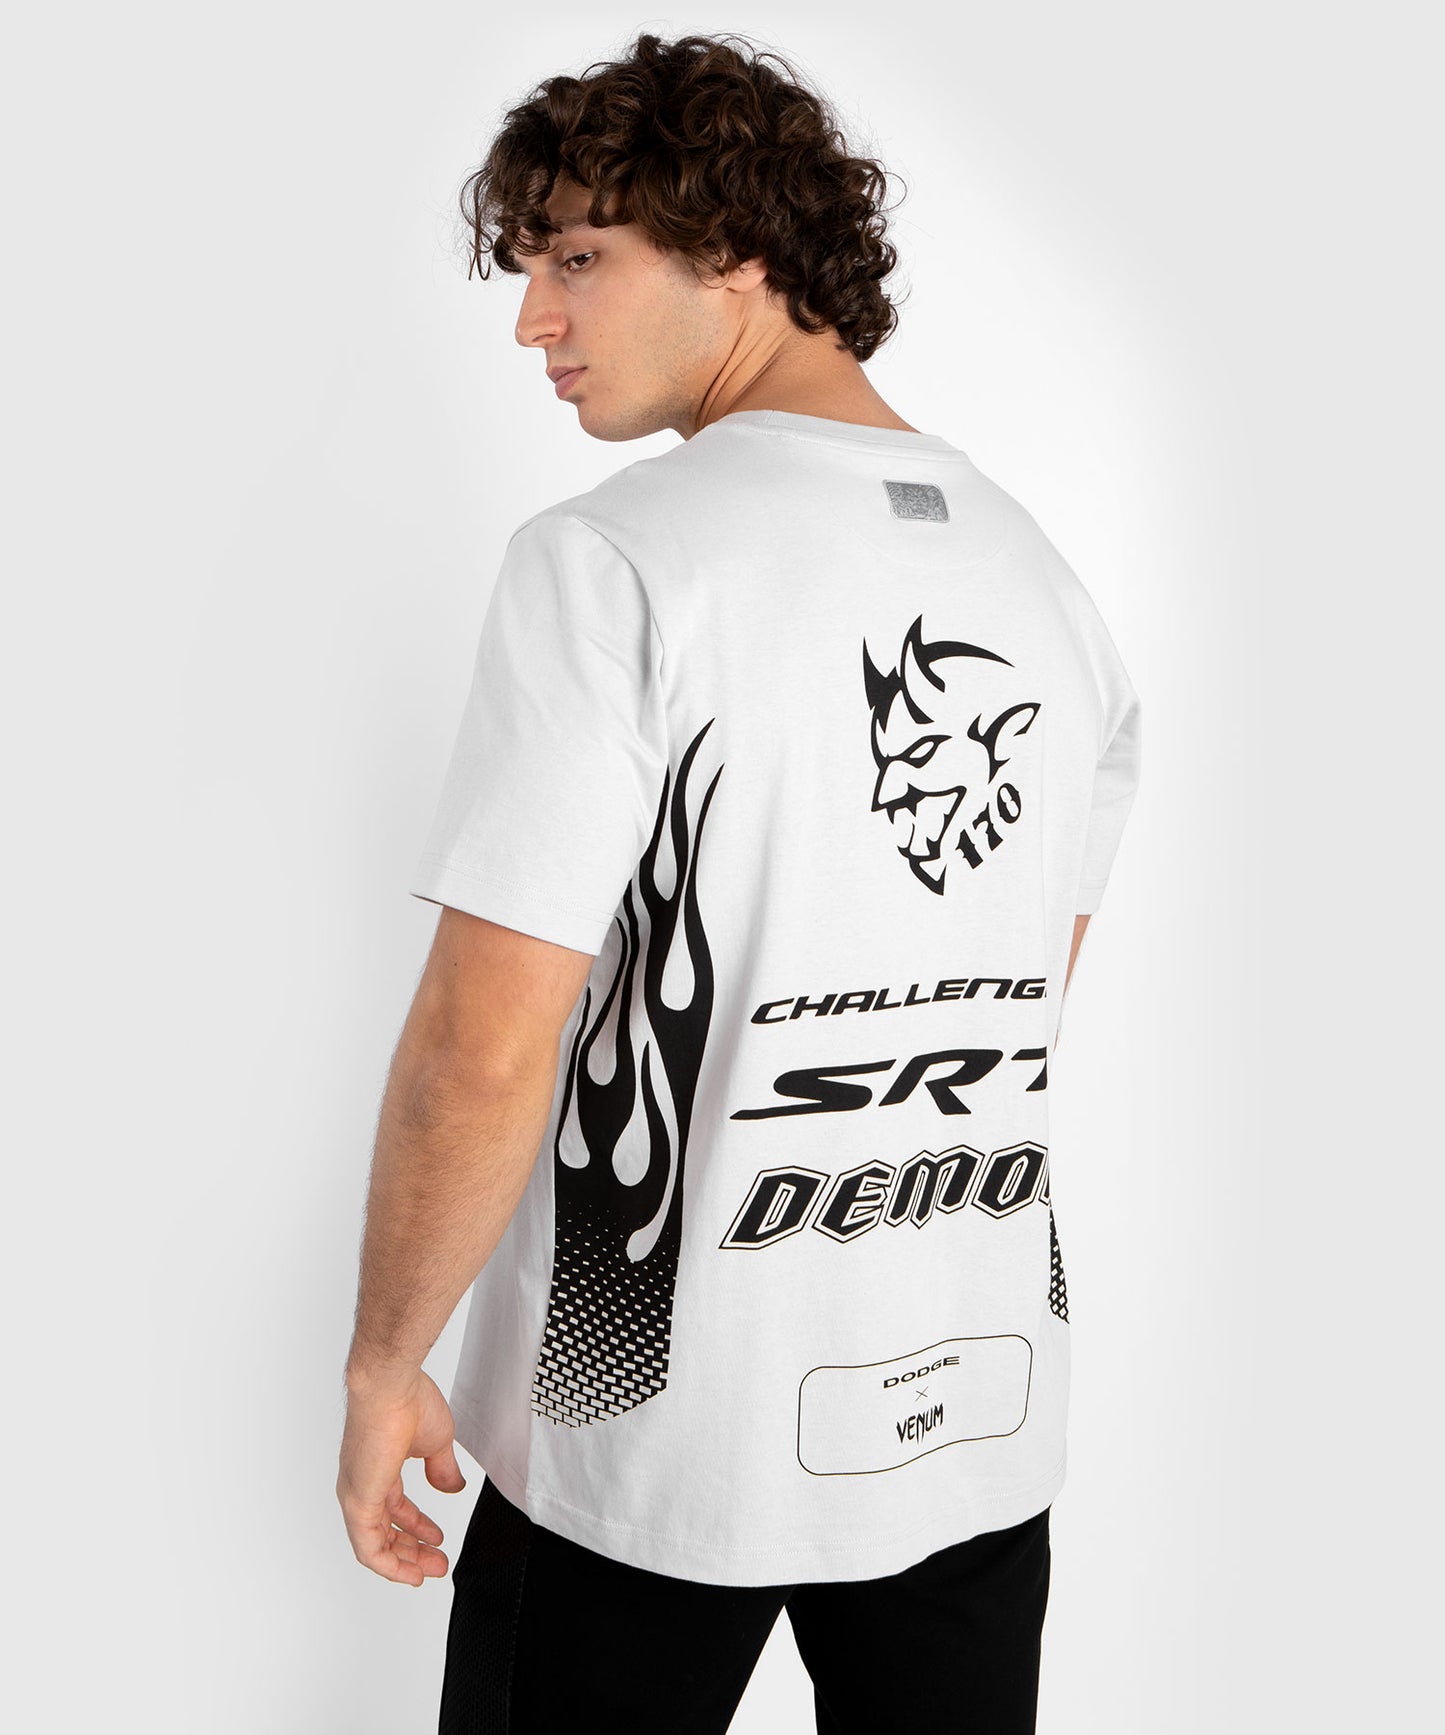 Venum x Dodge Demon 170  Men’s T-Shirt - Grey